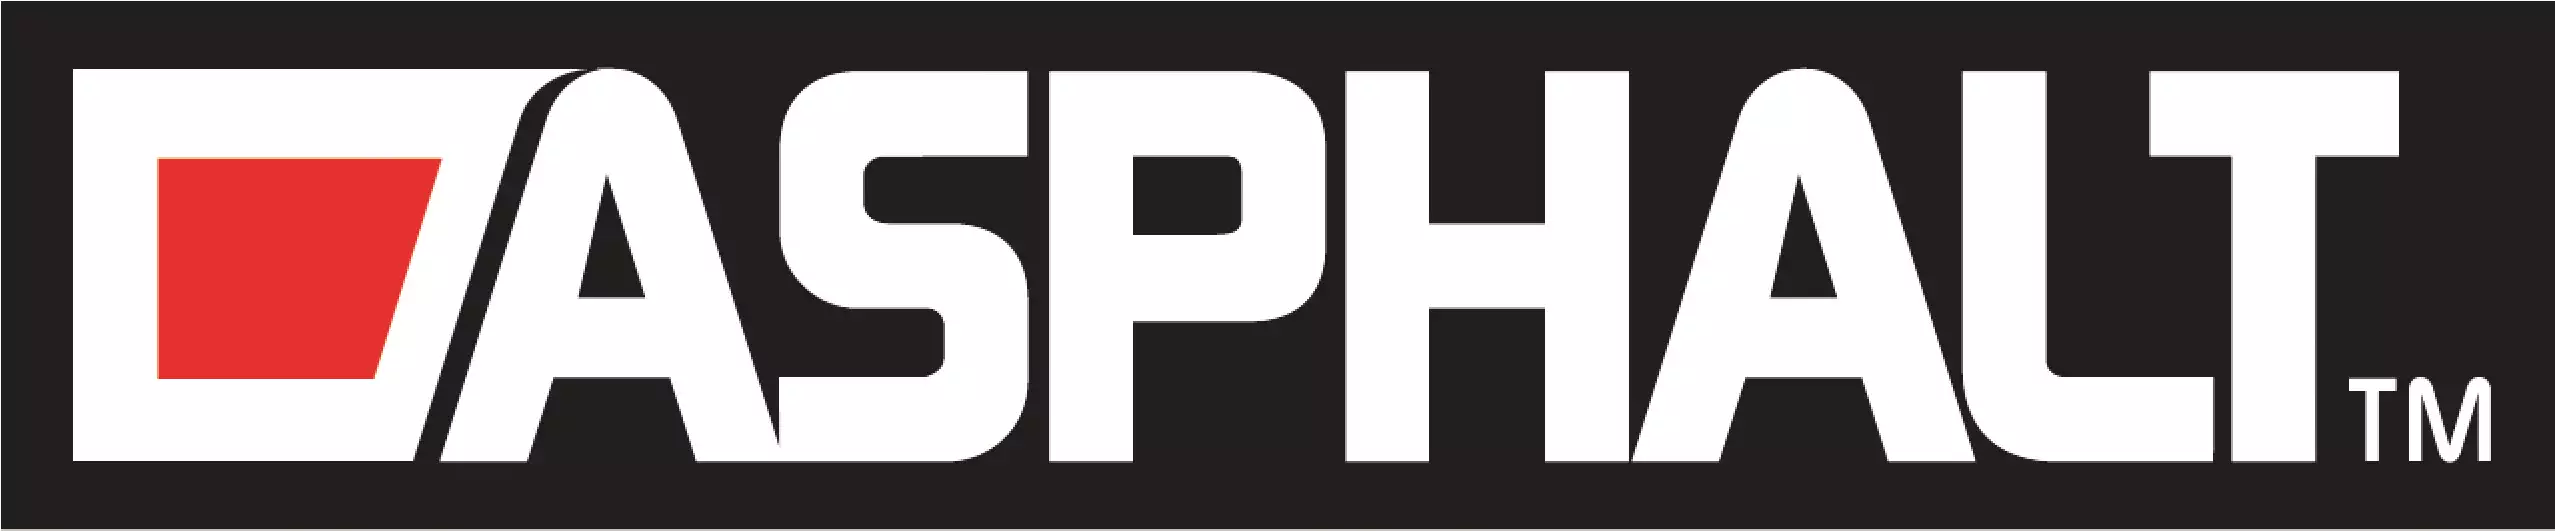 Logo de la marque Asphalt